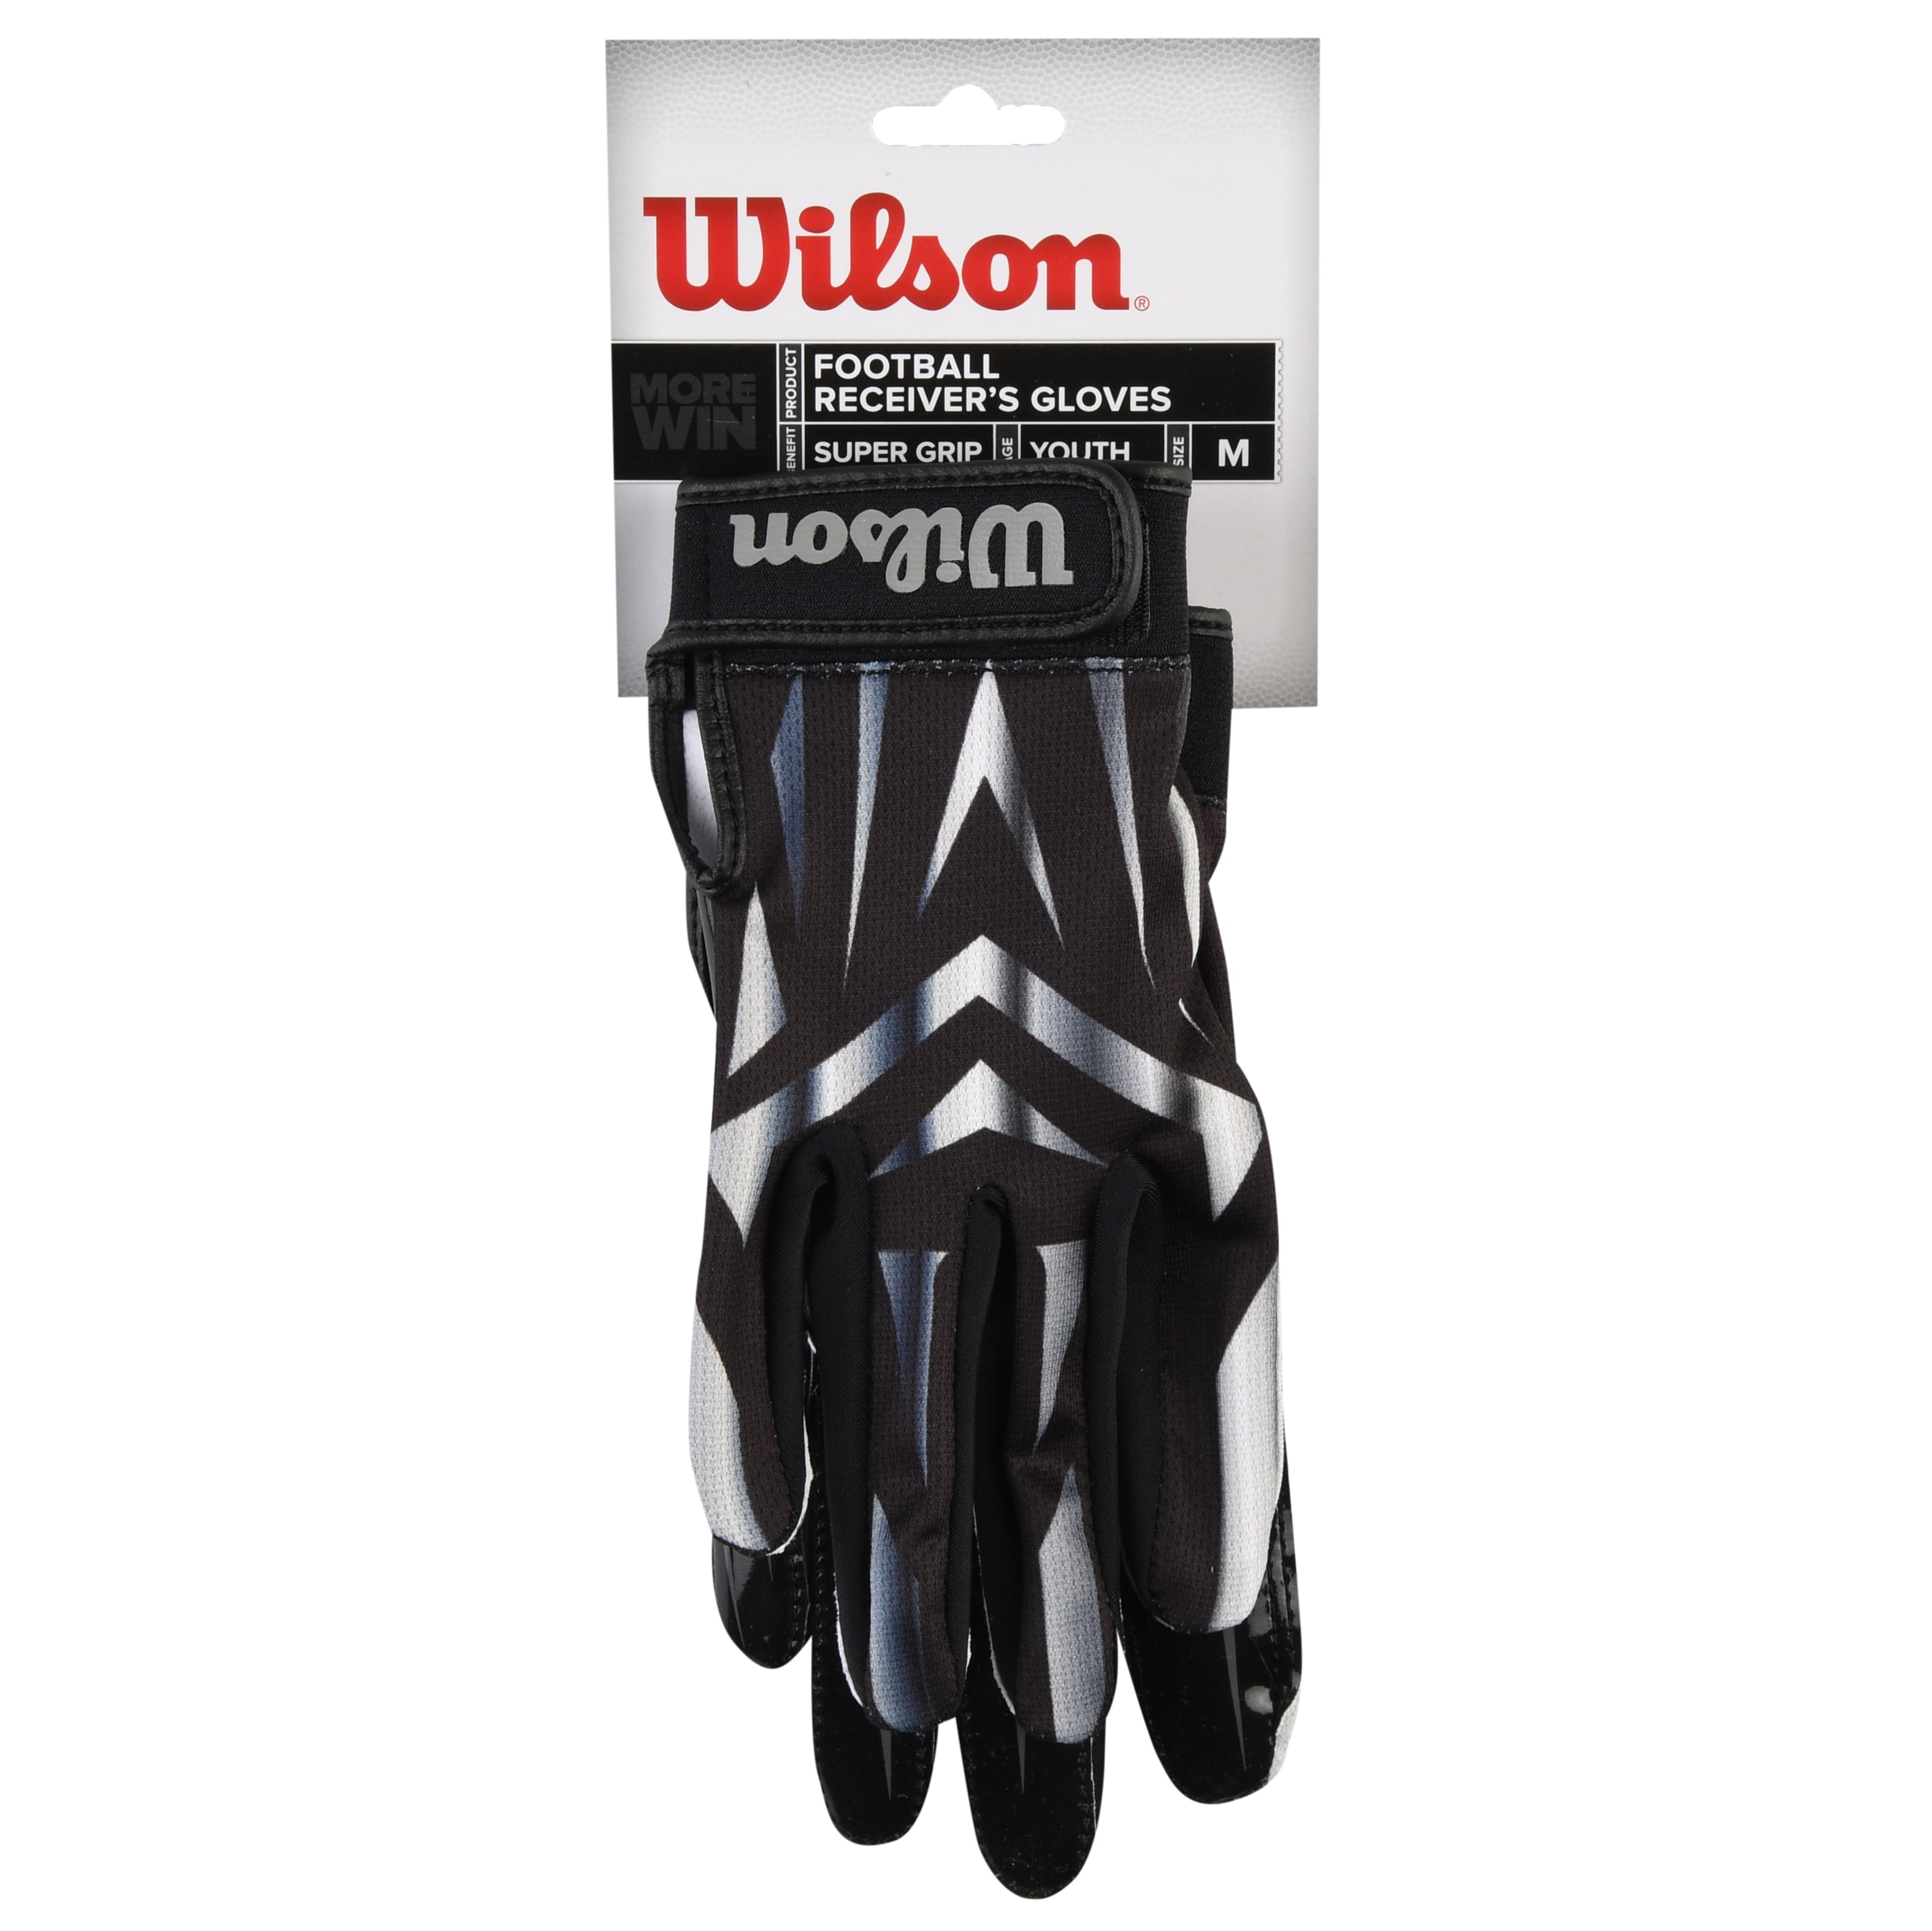 NEW* 1 pair WILSON SuperGrip Football Gloves YOUTH Medium Durable Washable Glove 